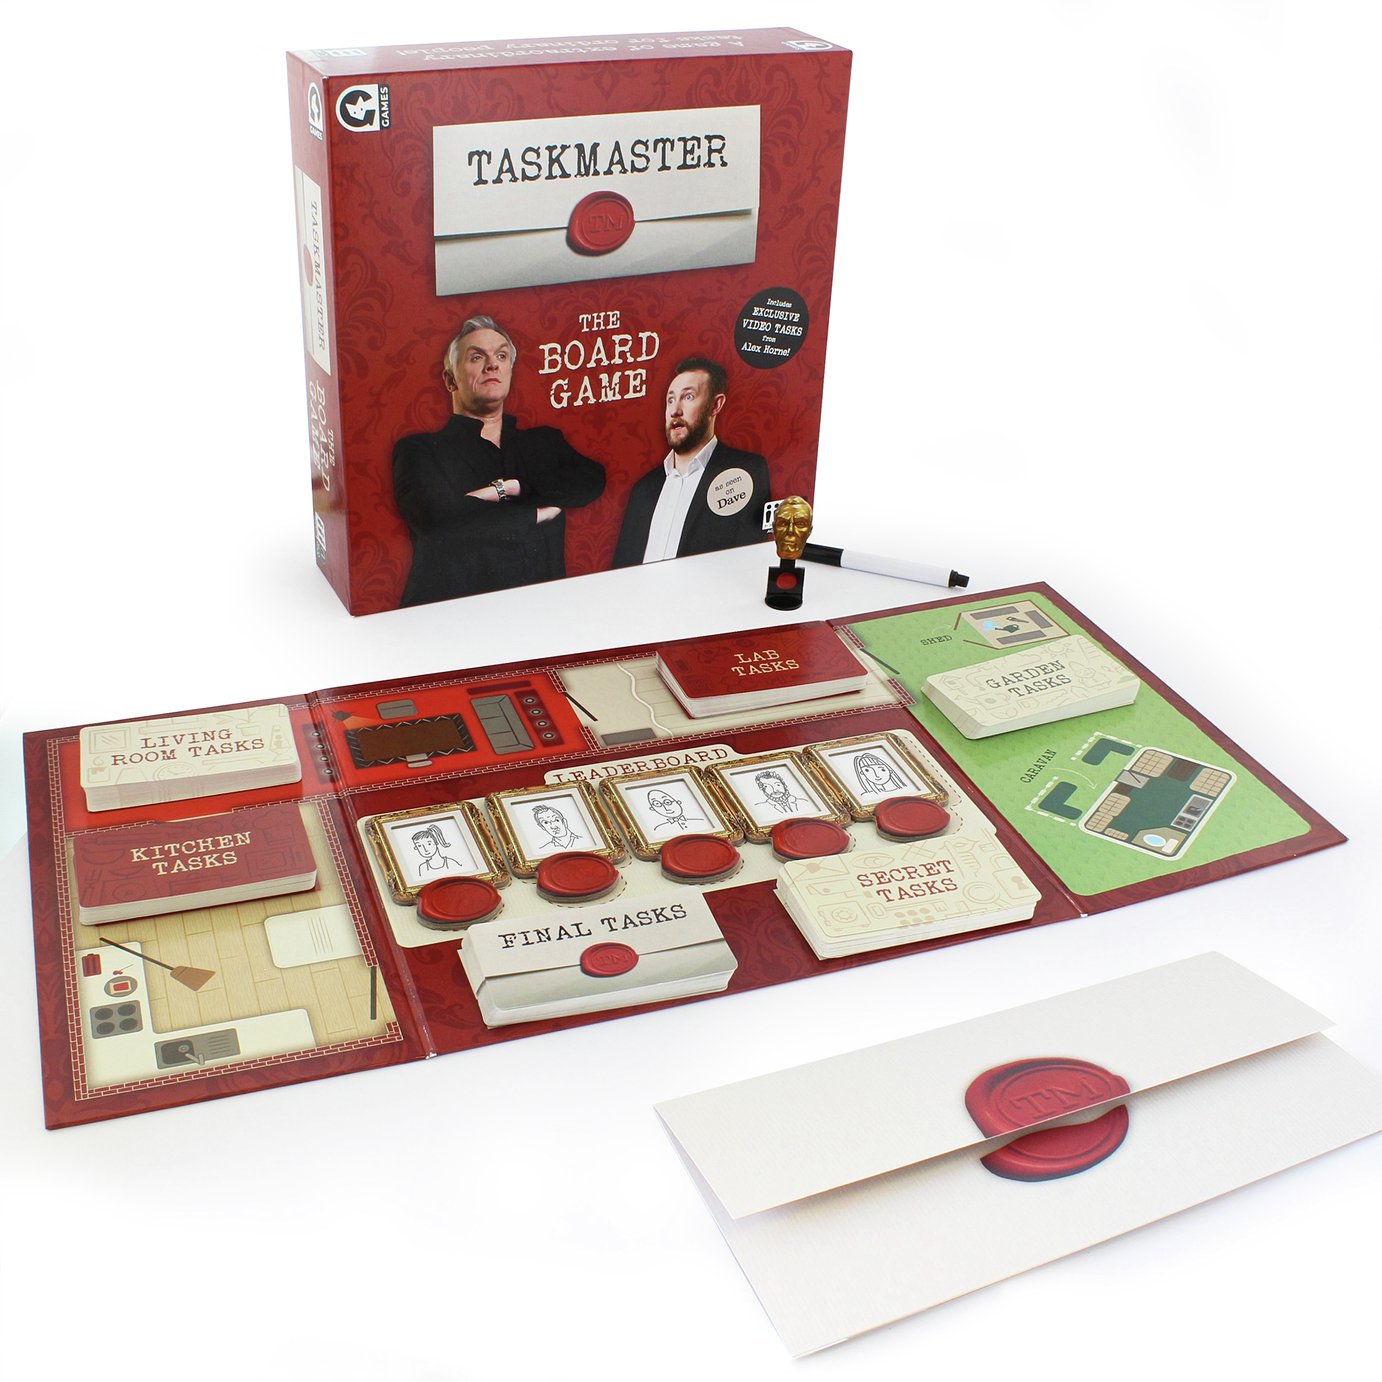 Taskmaster Board Game Review